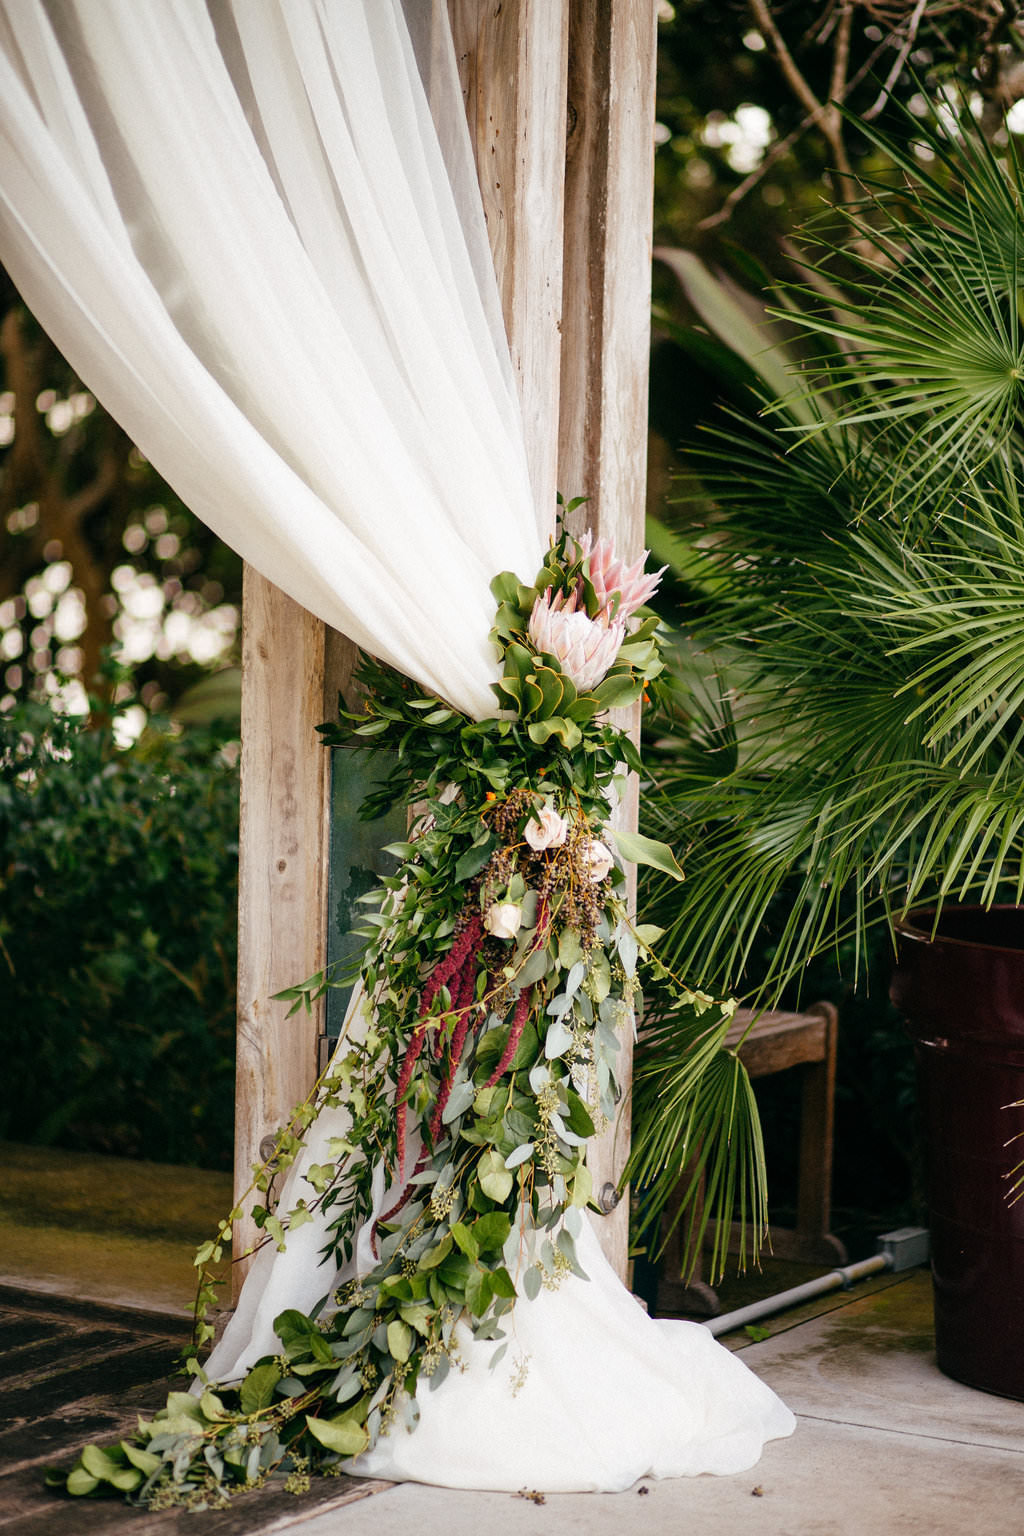 Garden Inspired Wedding Ceremony Decor, White Drapery, Greenery Garland, Red Hanging Amaranthus King Protea Flowers | Tampa Bay Wedding Planner NK Weddings